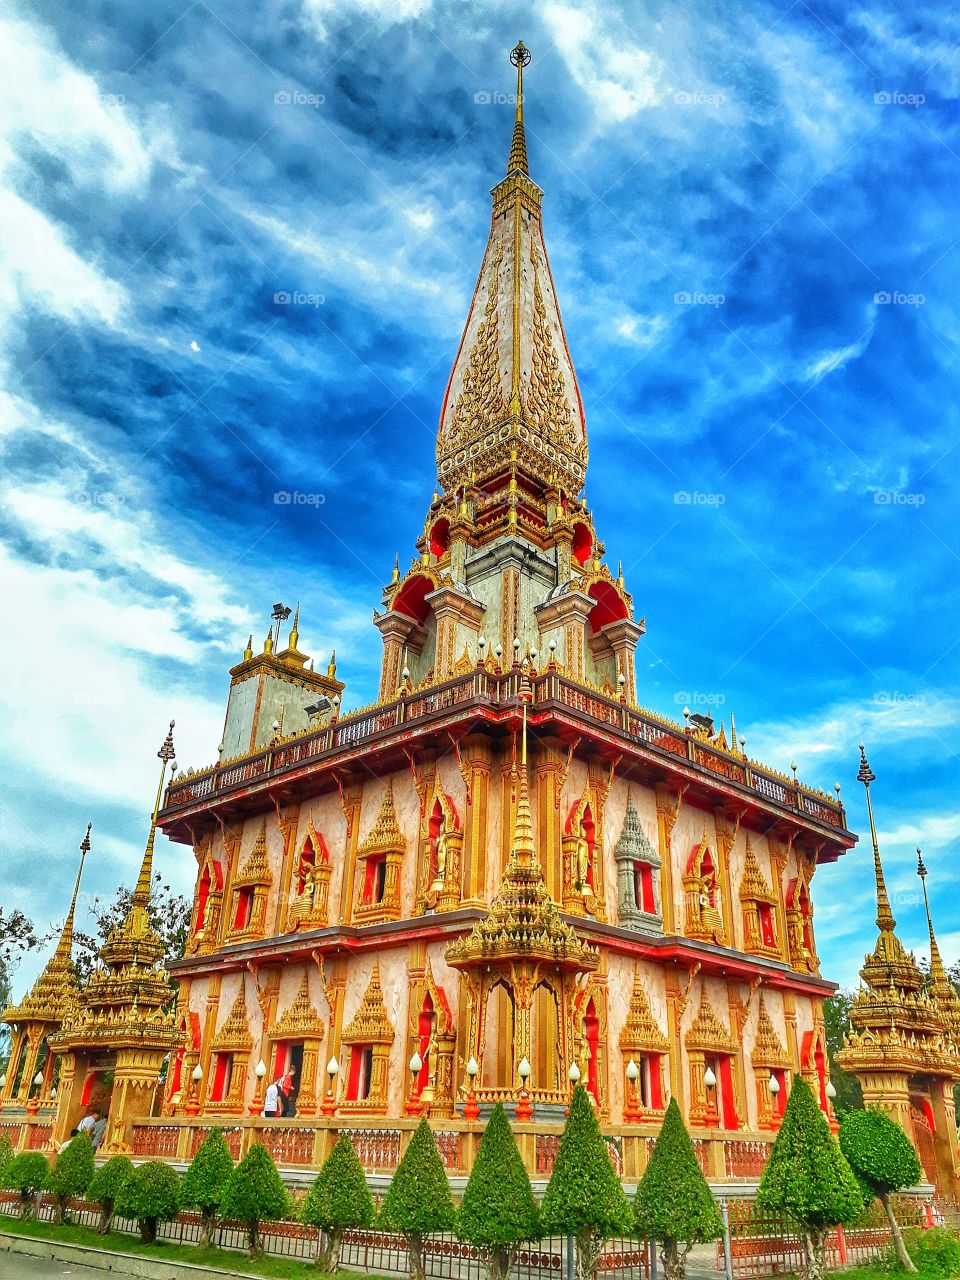 Location: Wat Chalong Temple, Phuket.
Photo taken using: samsung phone